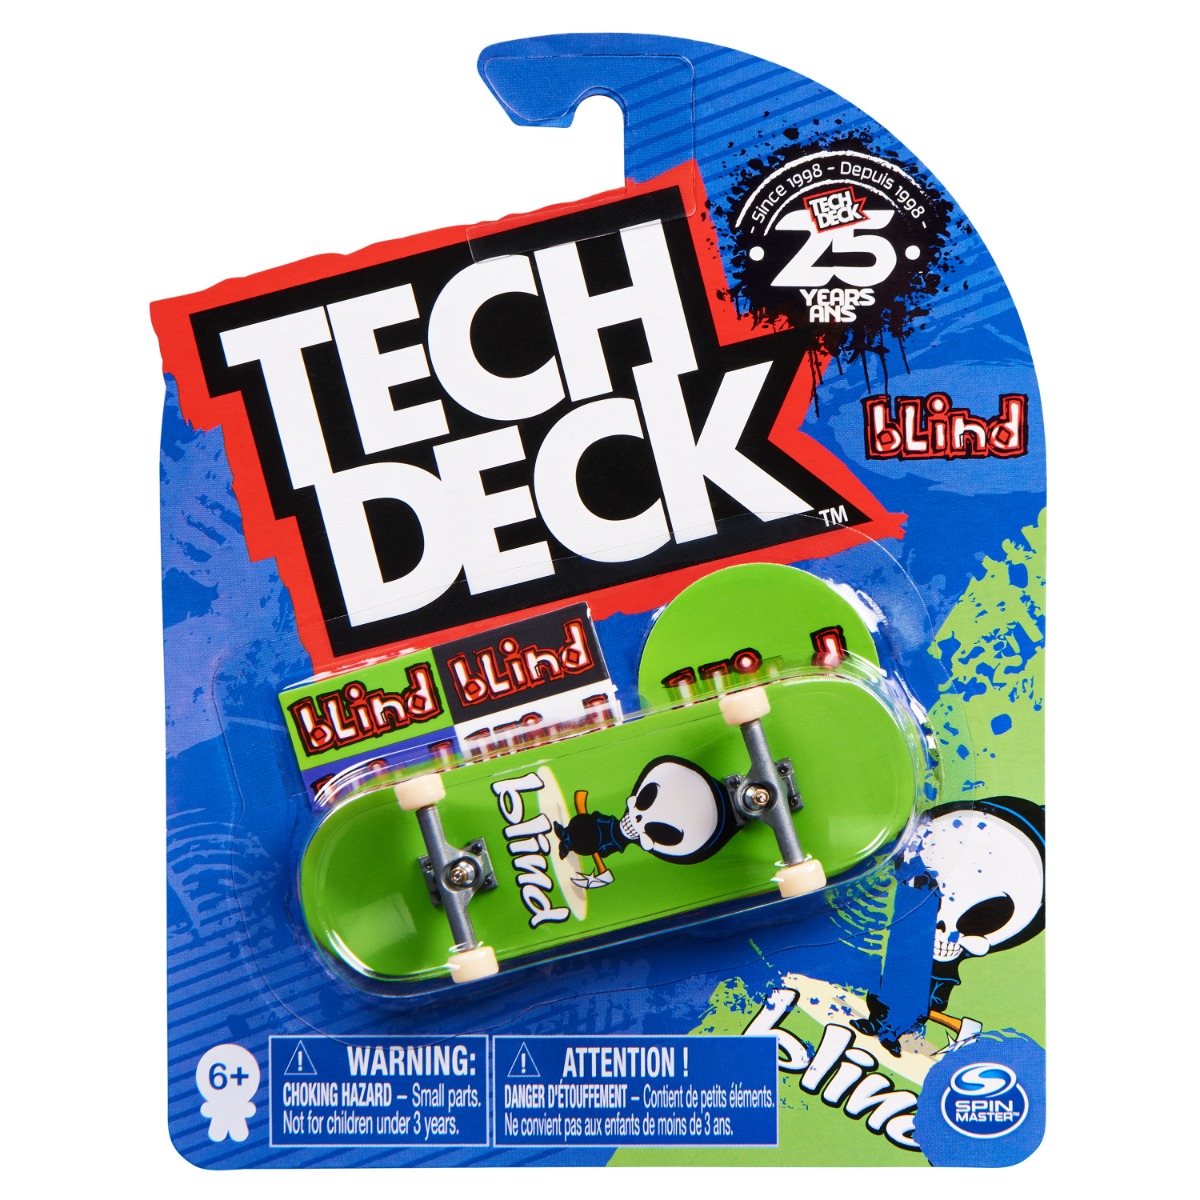 Mini placa skateboard Tech Deck, Blind, 20141229 20141229